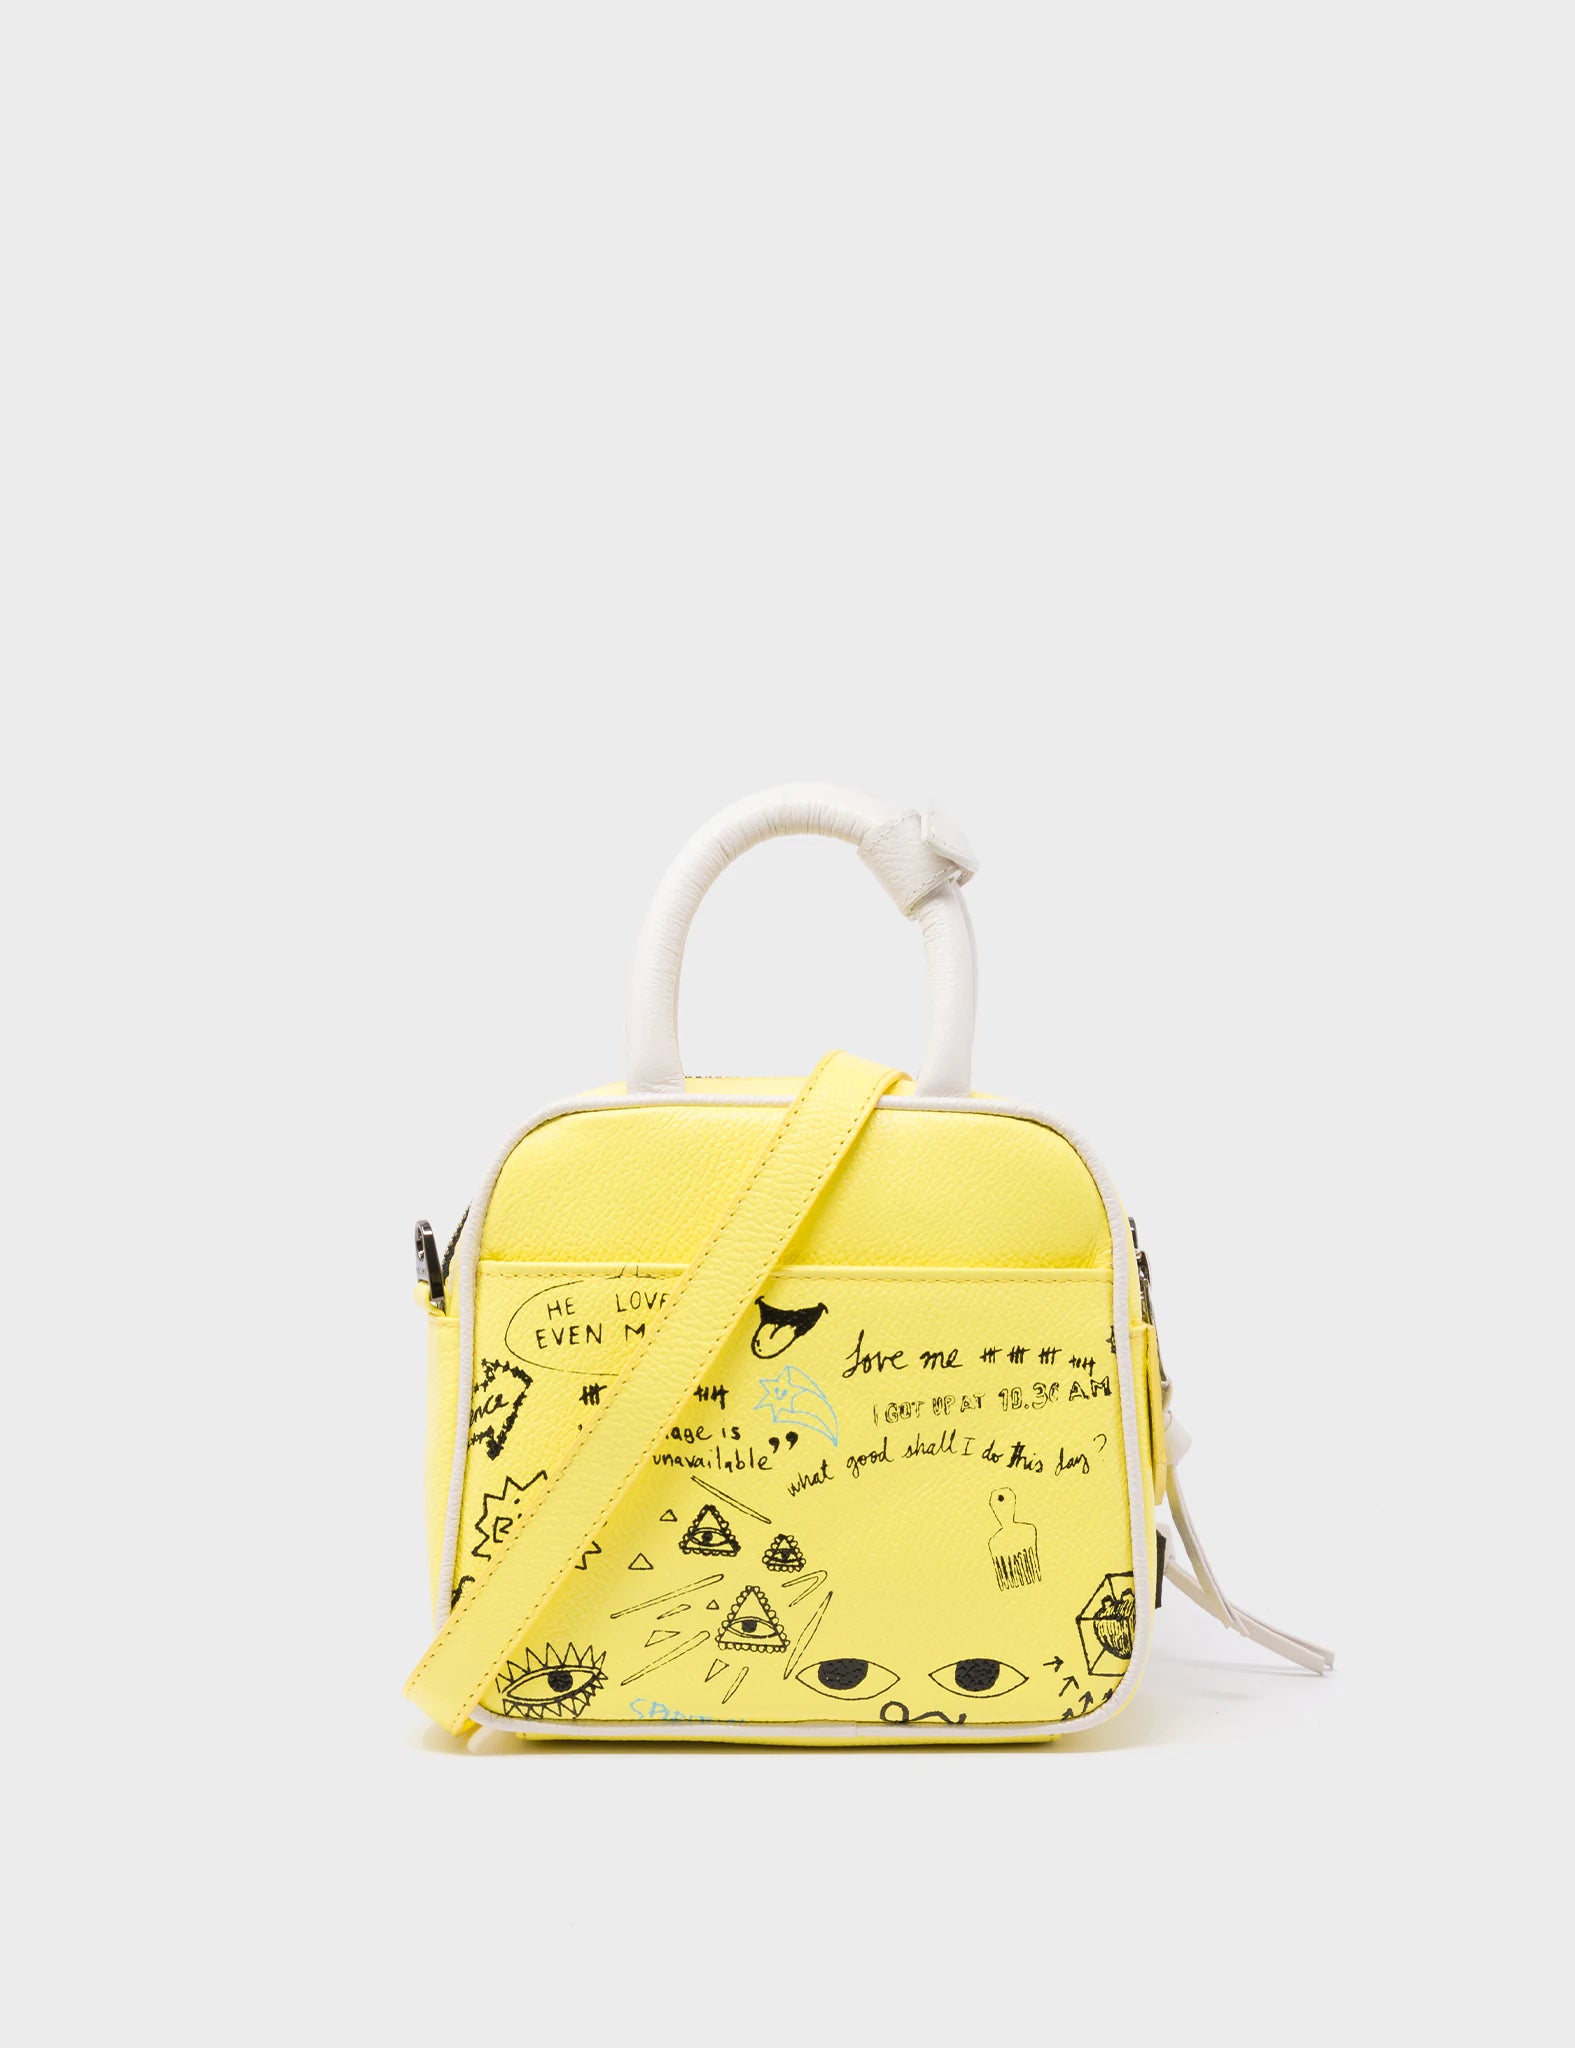 Marino Mini Crossbody Yellow Leather Bag - Graffiti Print - Back View